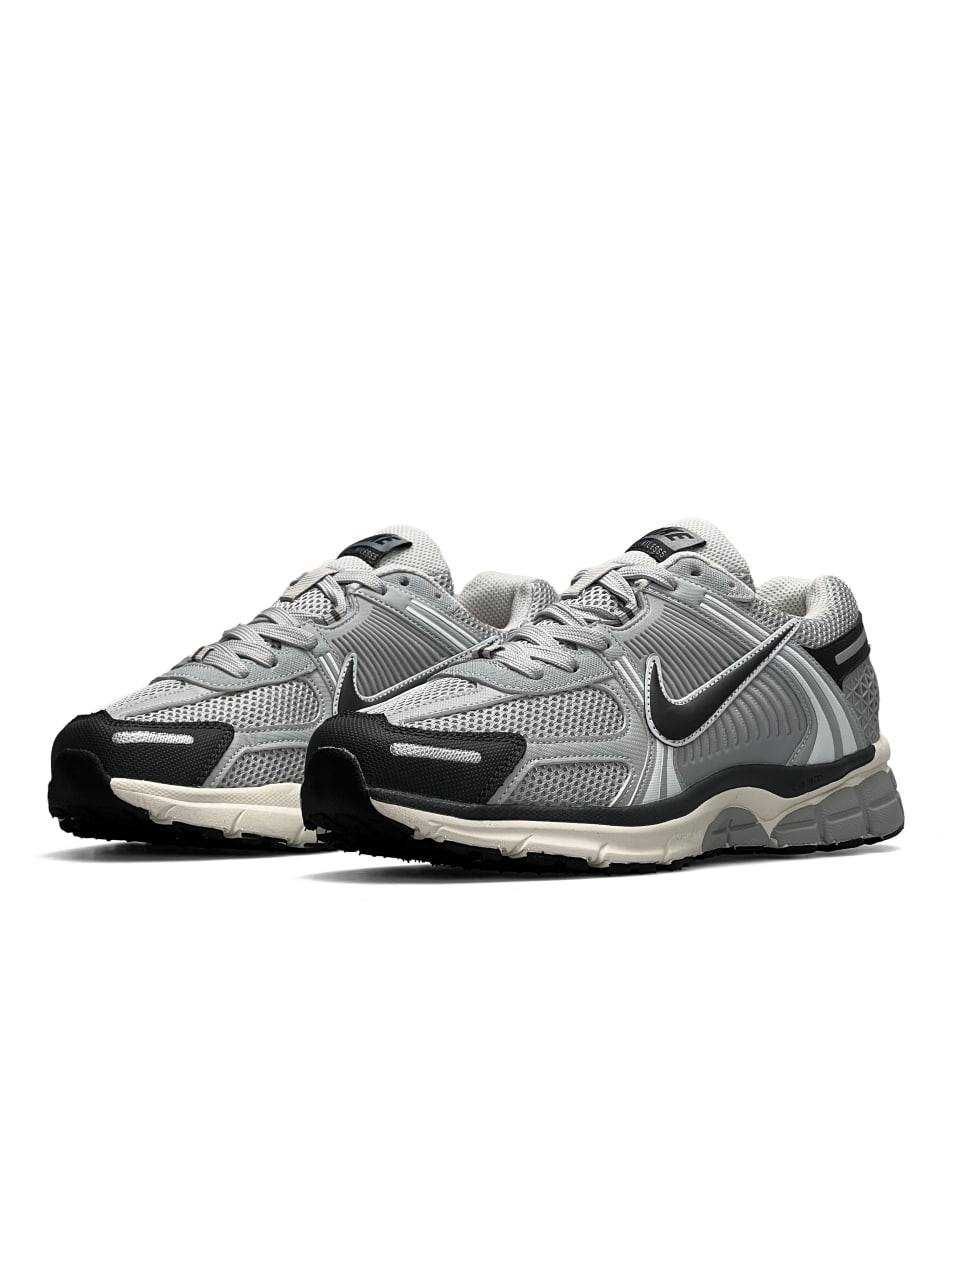 Nike Vomero 5 New Gray Silver Black кроссовки мужские nike zoom (найк)